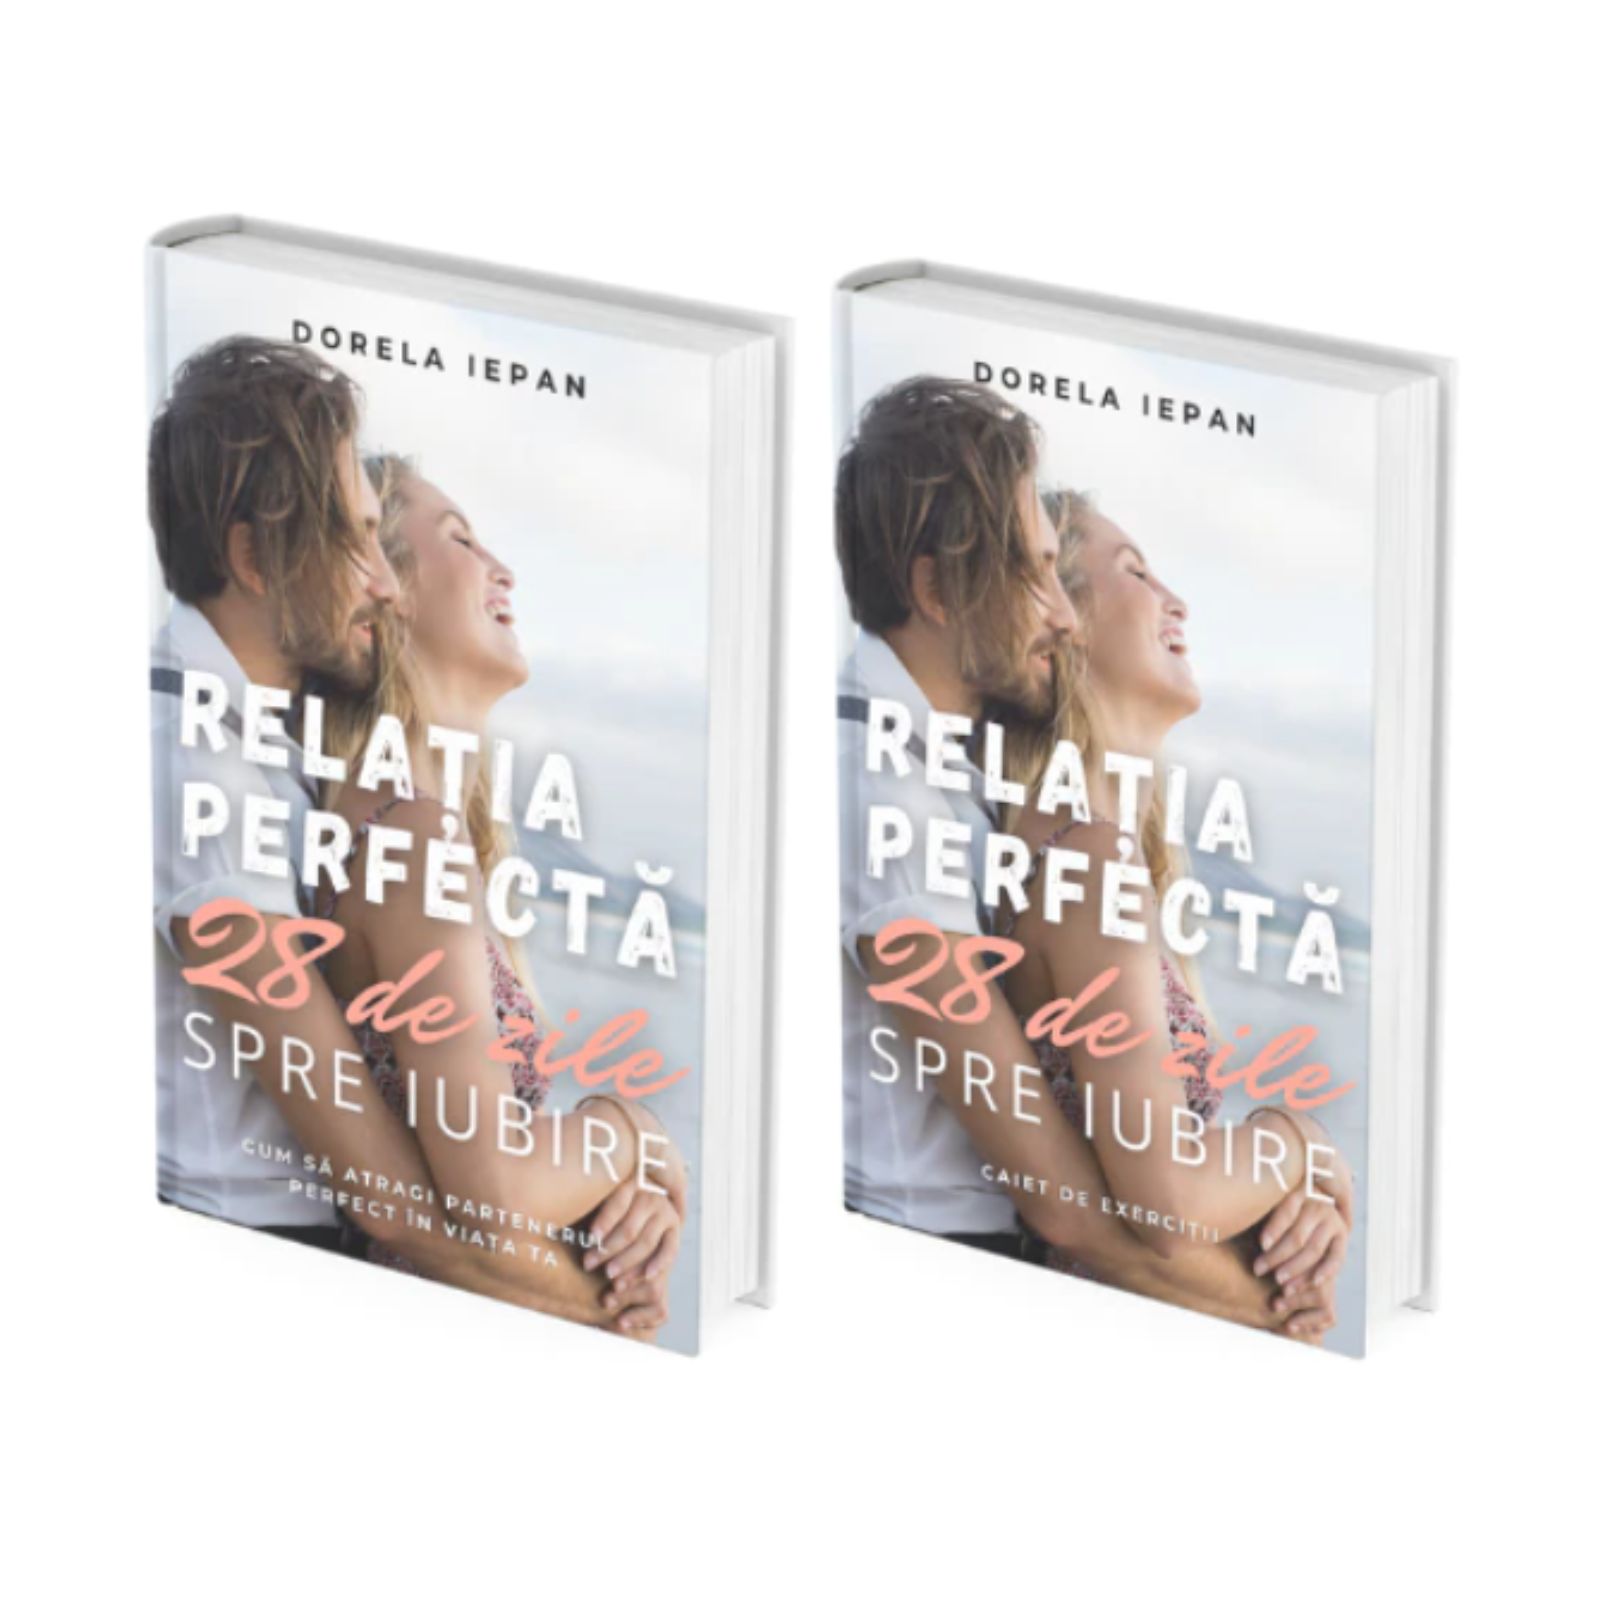 Intestines historic Or Relatia perfecta- 28 de zile spre iubire, Dorela Iepan, set carte si caiet  de exercitii - eMAG.ro